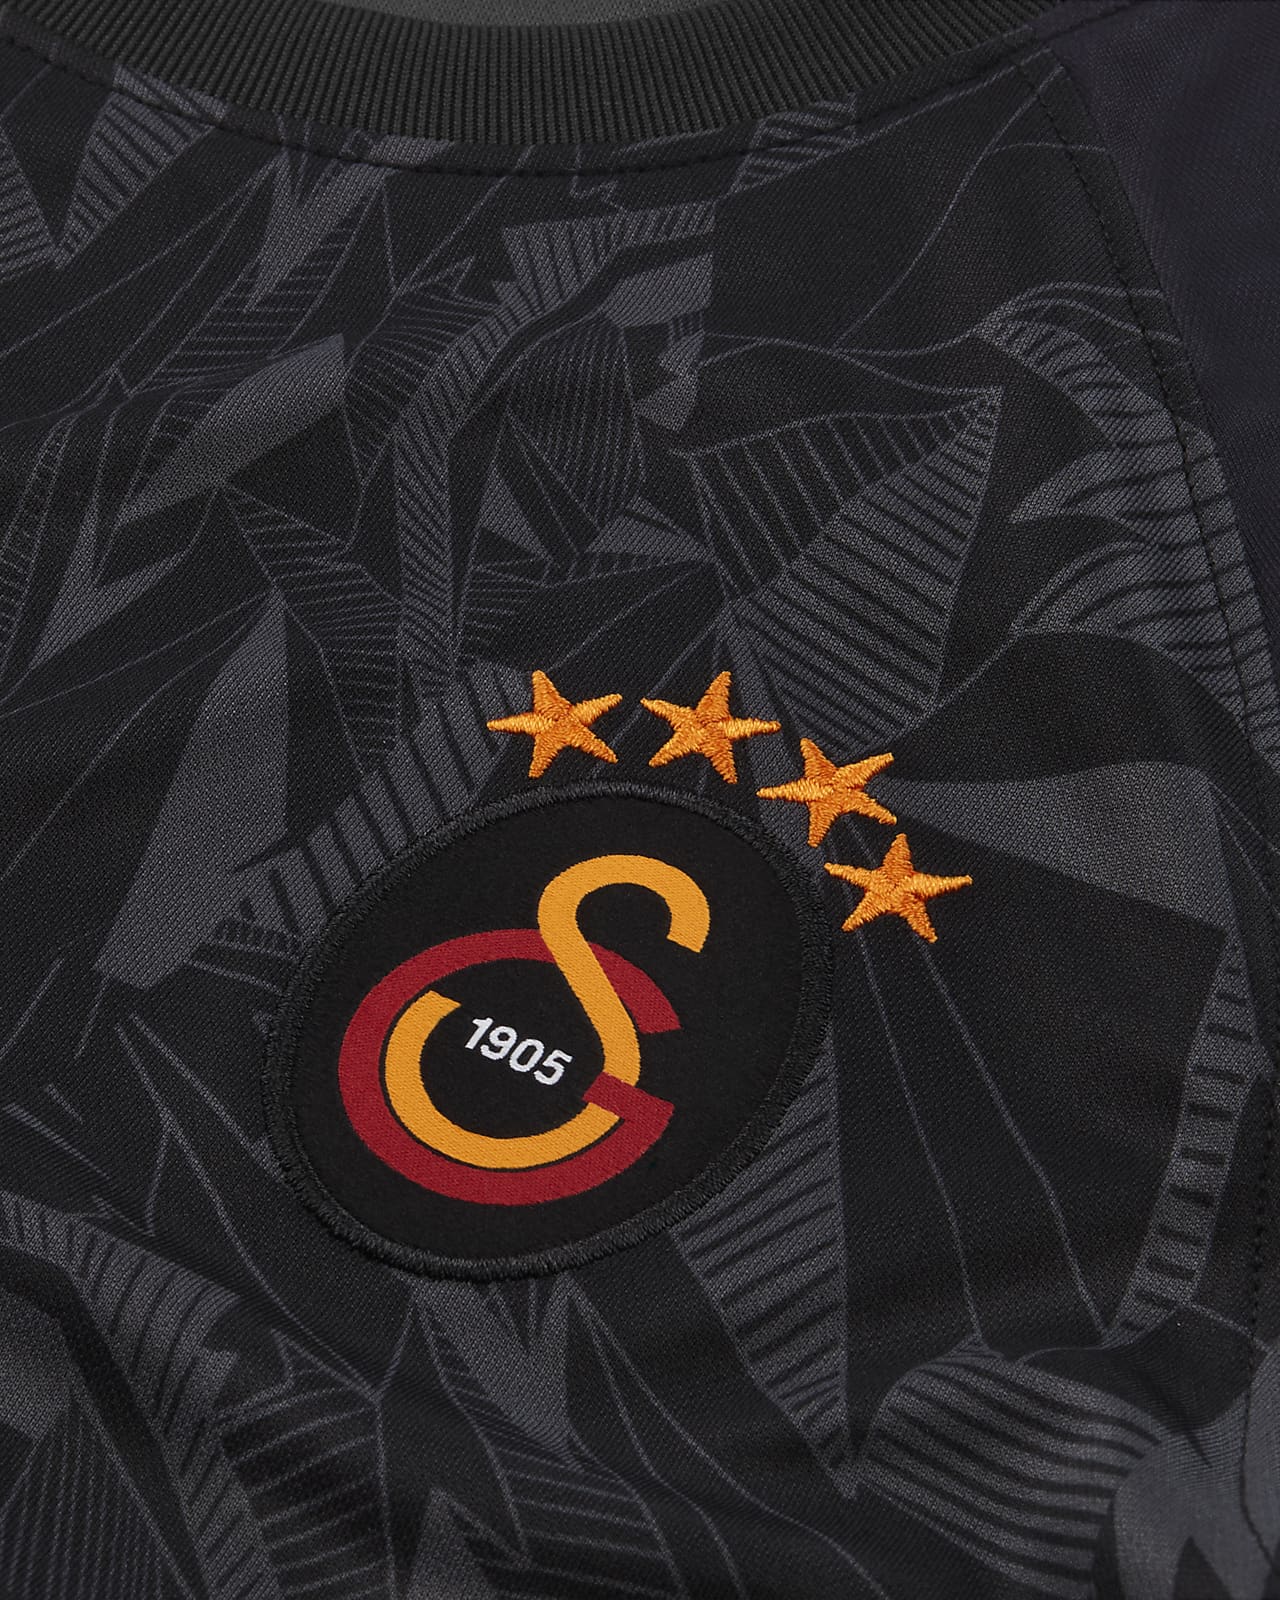 Galatasaray 2022/23 Away Women's Nike Dri-FIT Short-Sleeve Football Top.  Nike LU